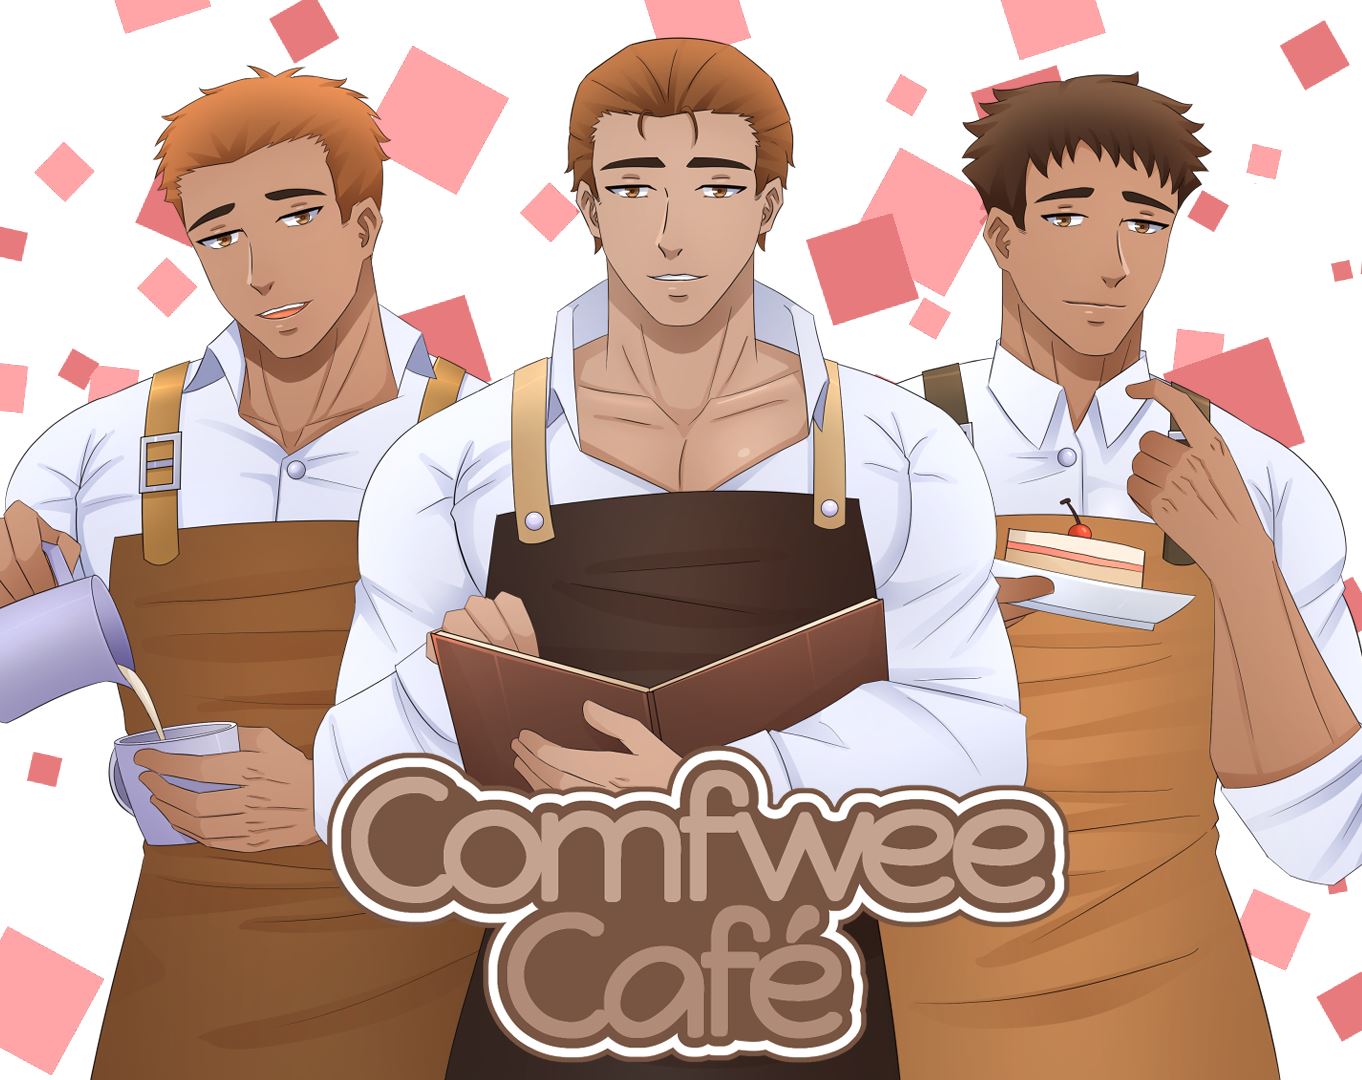 Comfwee Café [Finished] - Version: Final